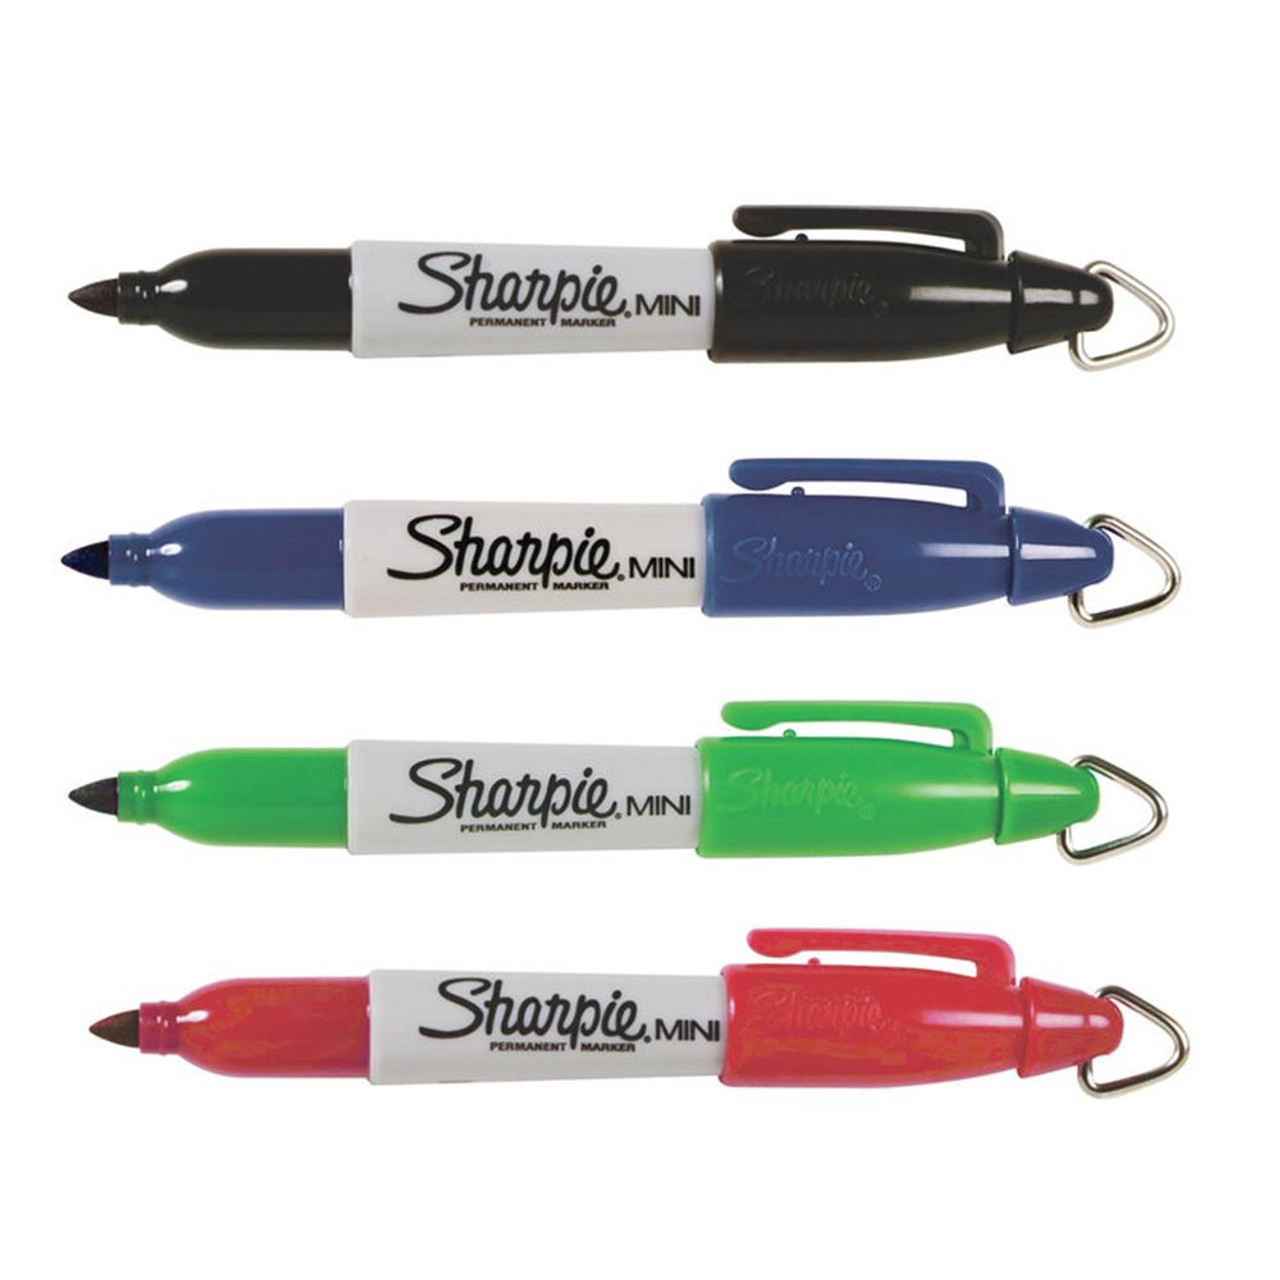 Sharpie Permanent Marker - 4 Pack